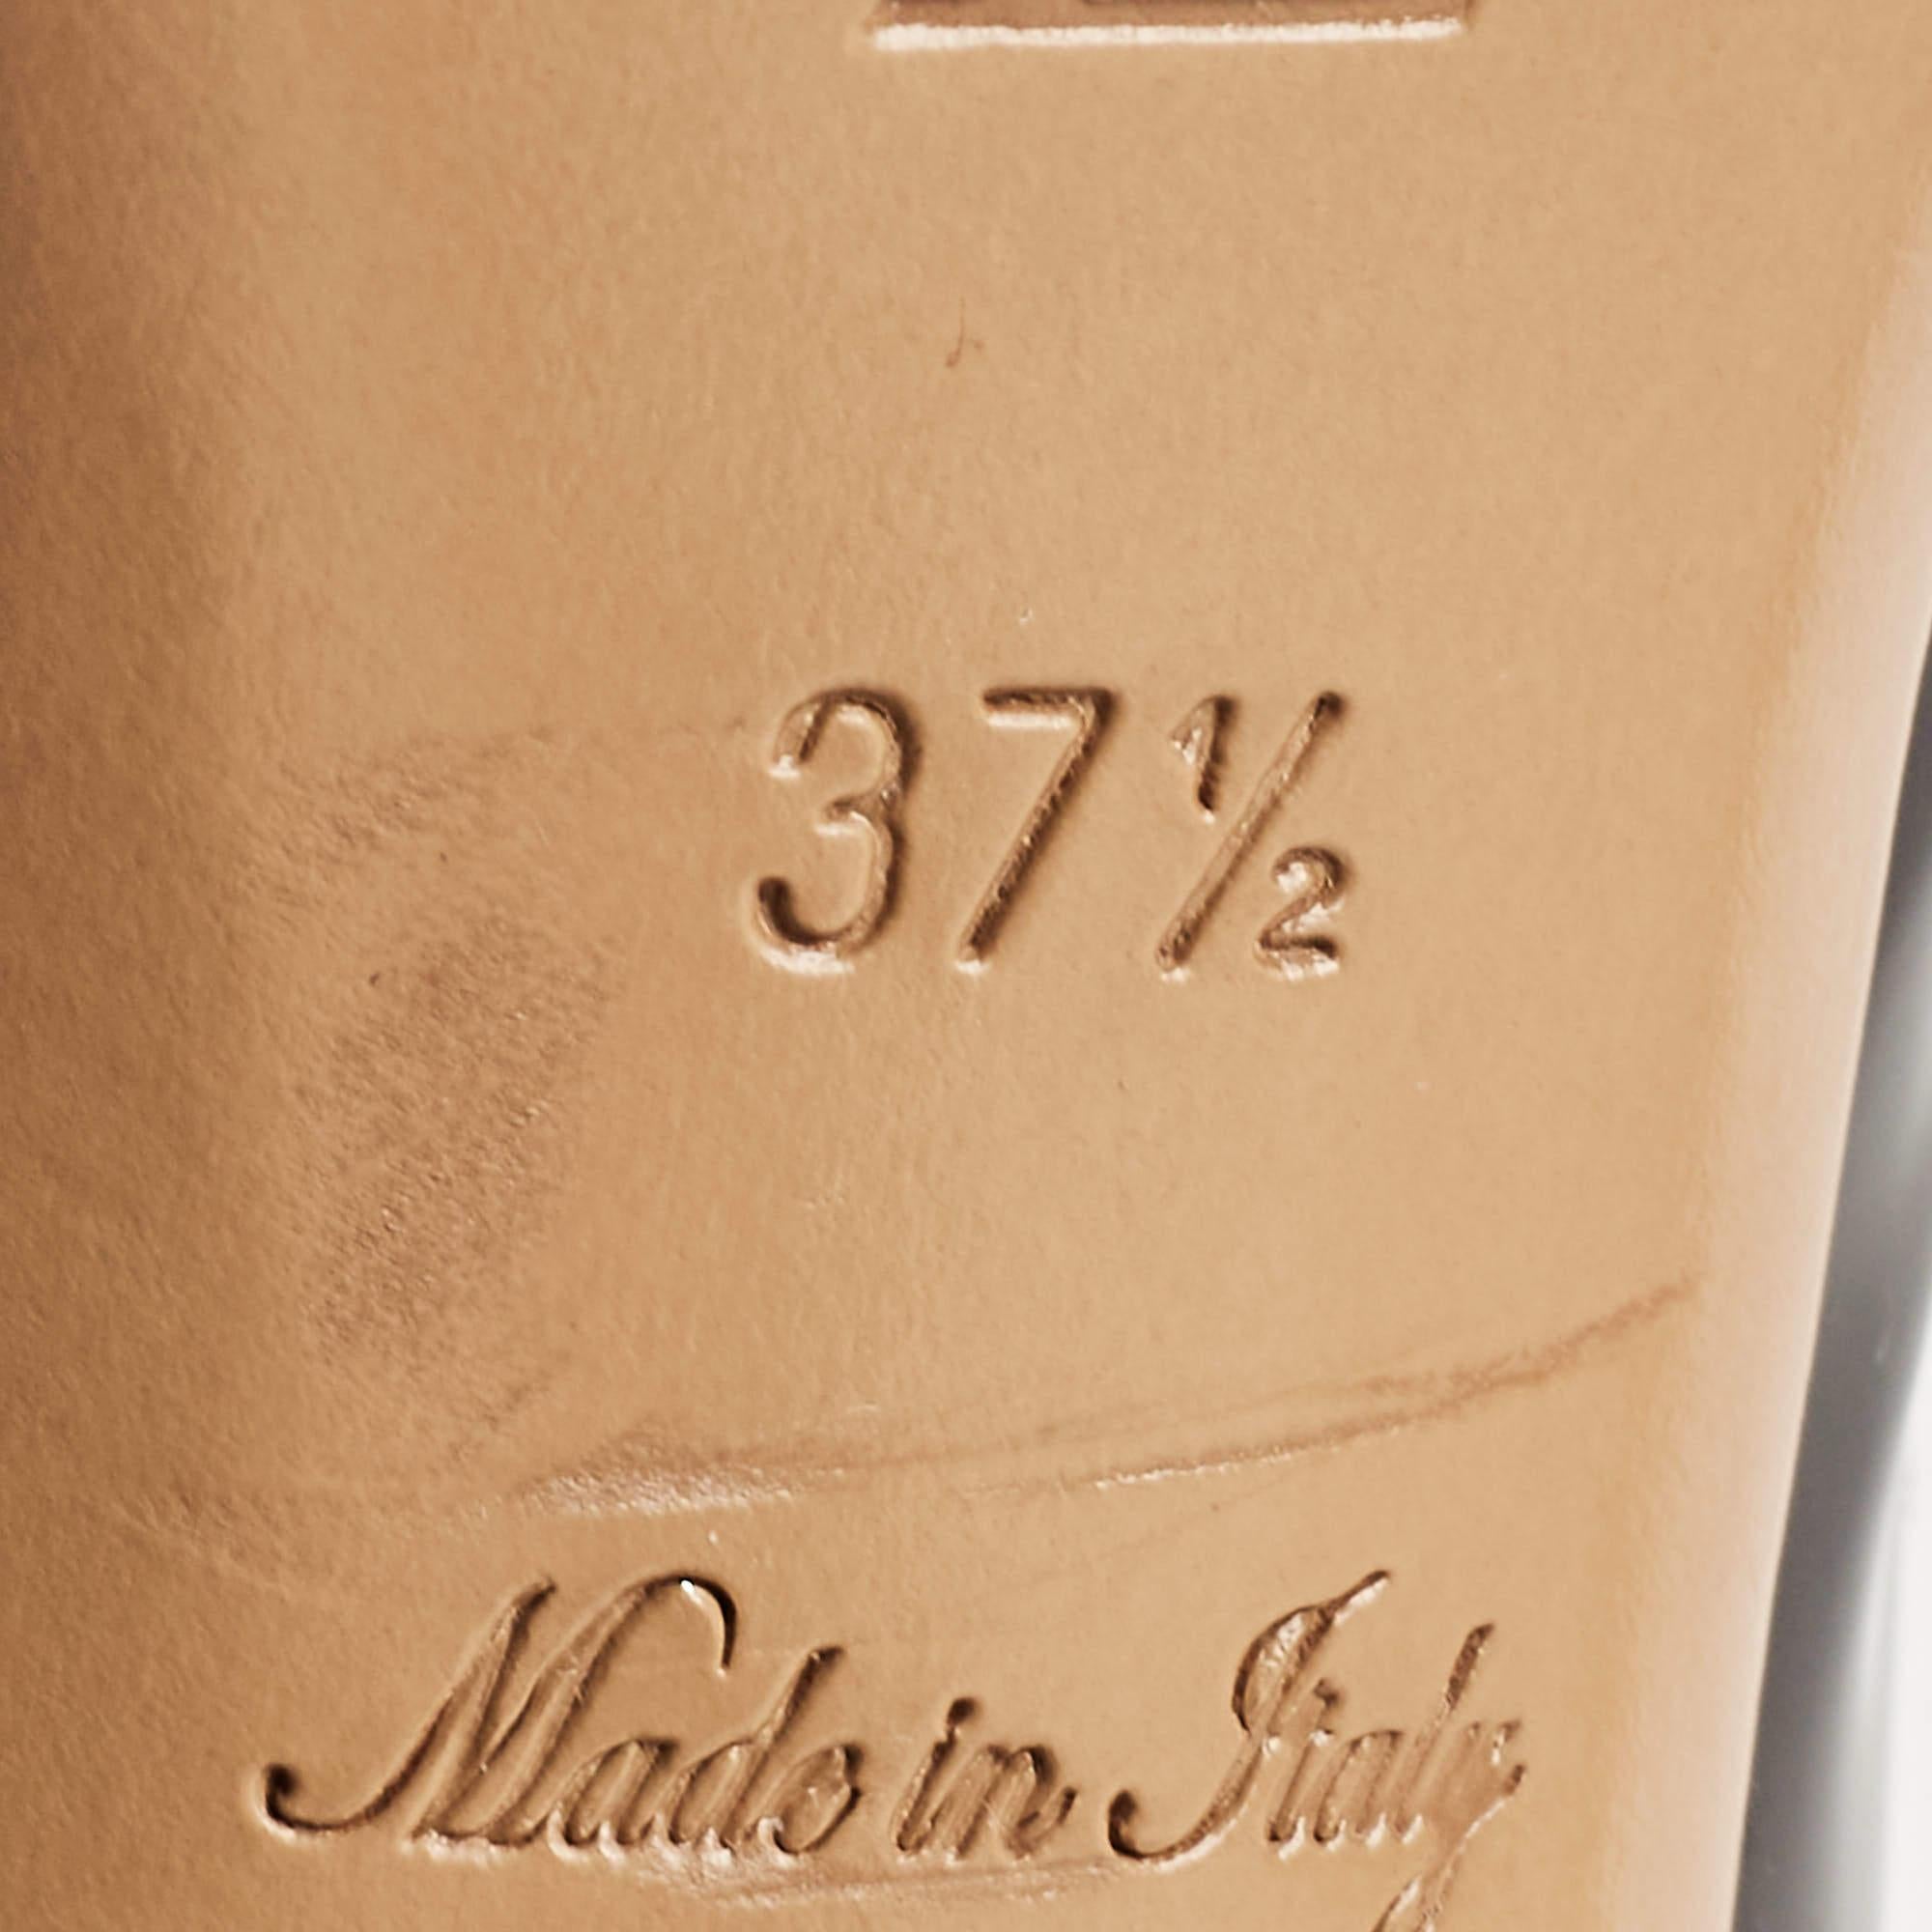 Louis Vuitton Dark Burgundy Patent Leather Open Toe Pumps Size 37.5 For Sale 1